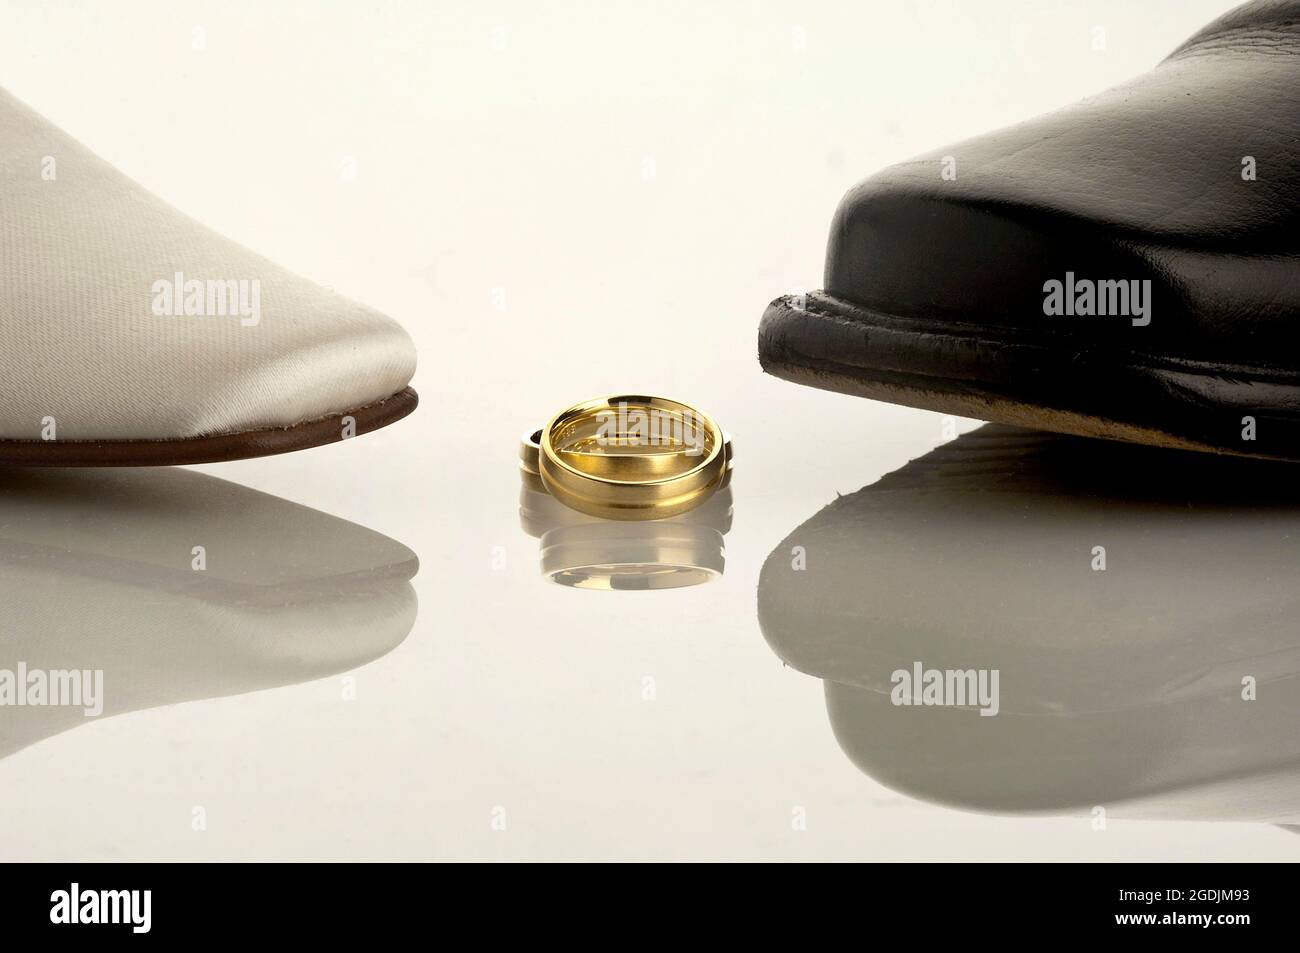 zapatos de boda y anillos de boda dorados Foto de stock